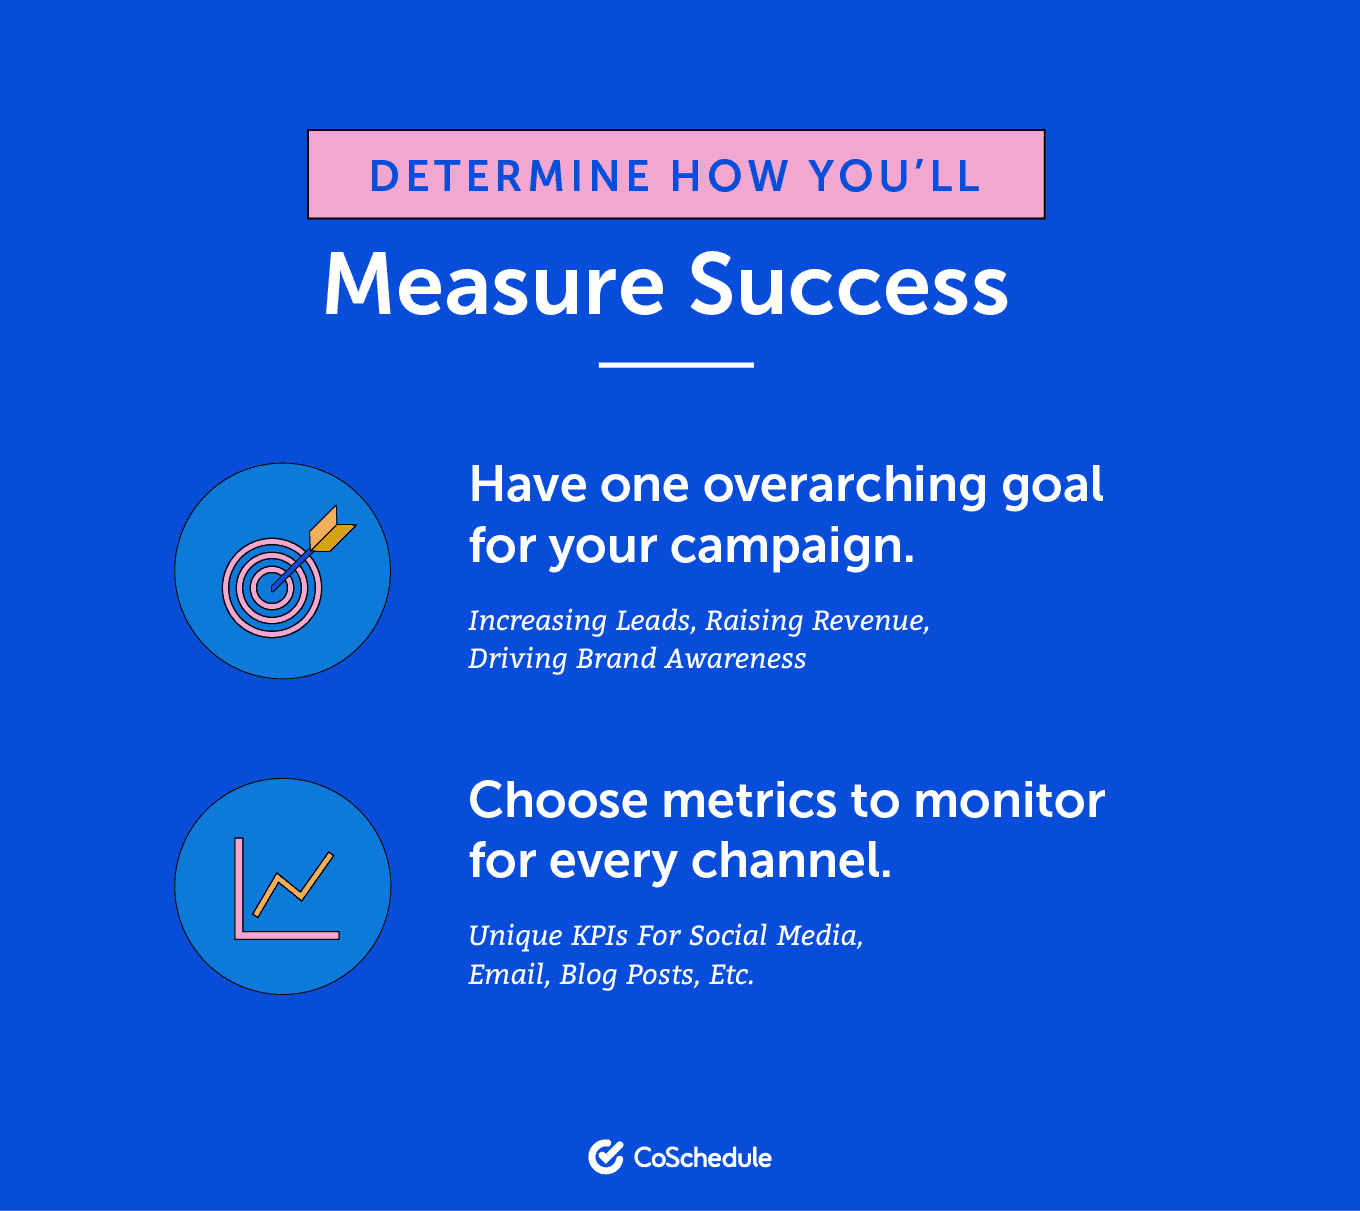 Determine how you'll measure success